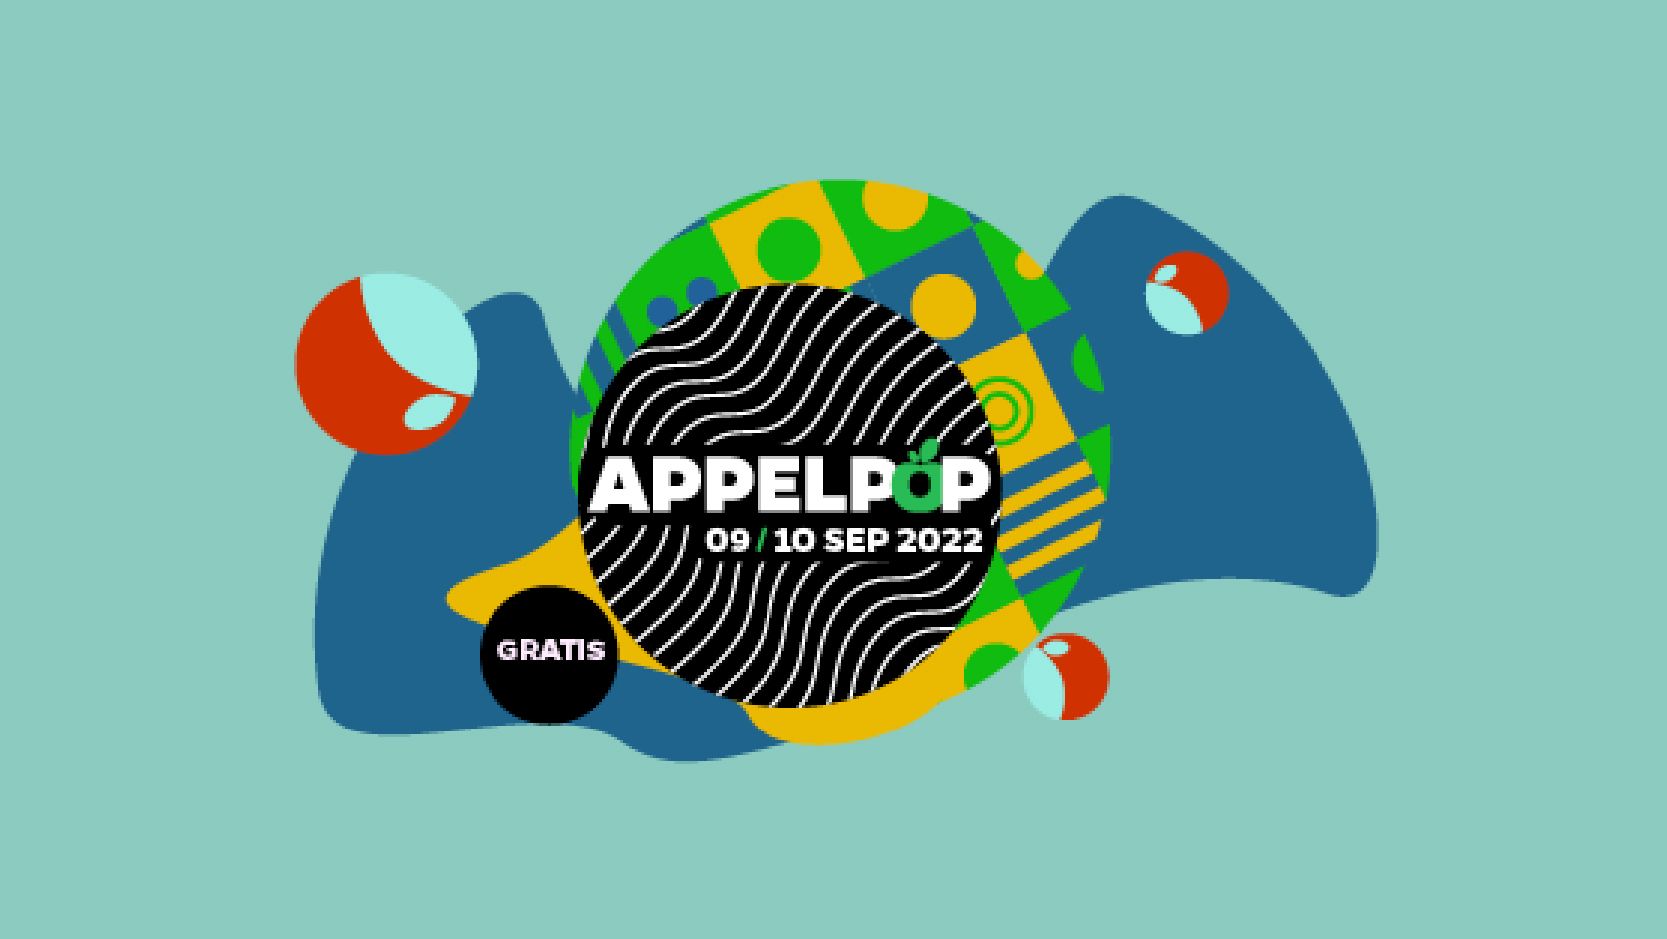 Appelpop cover